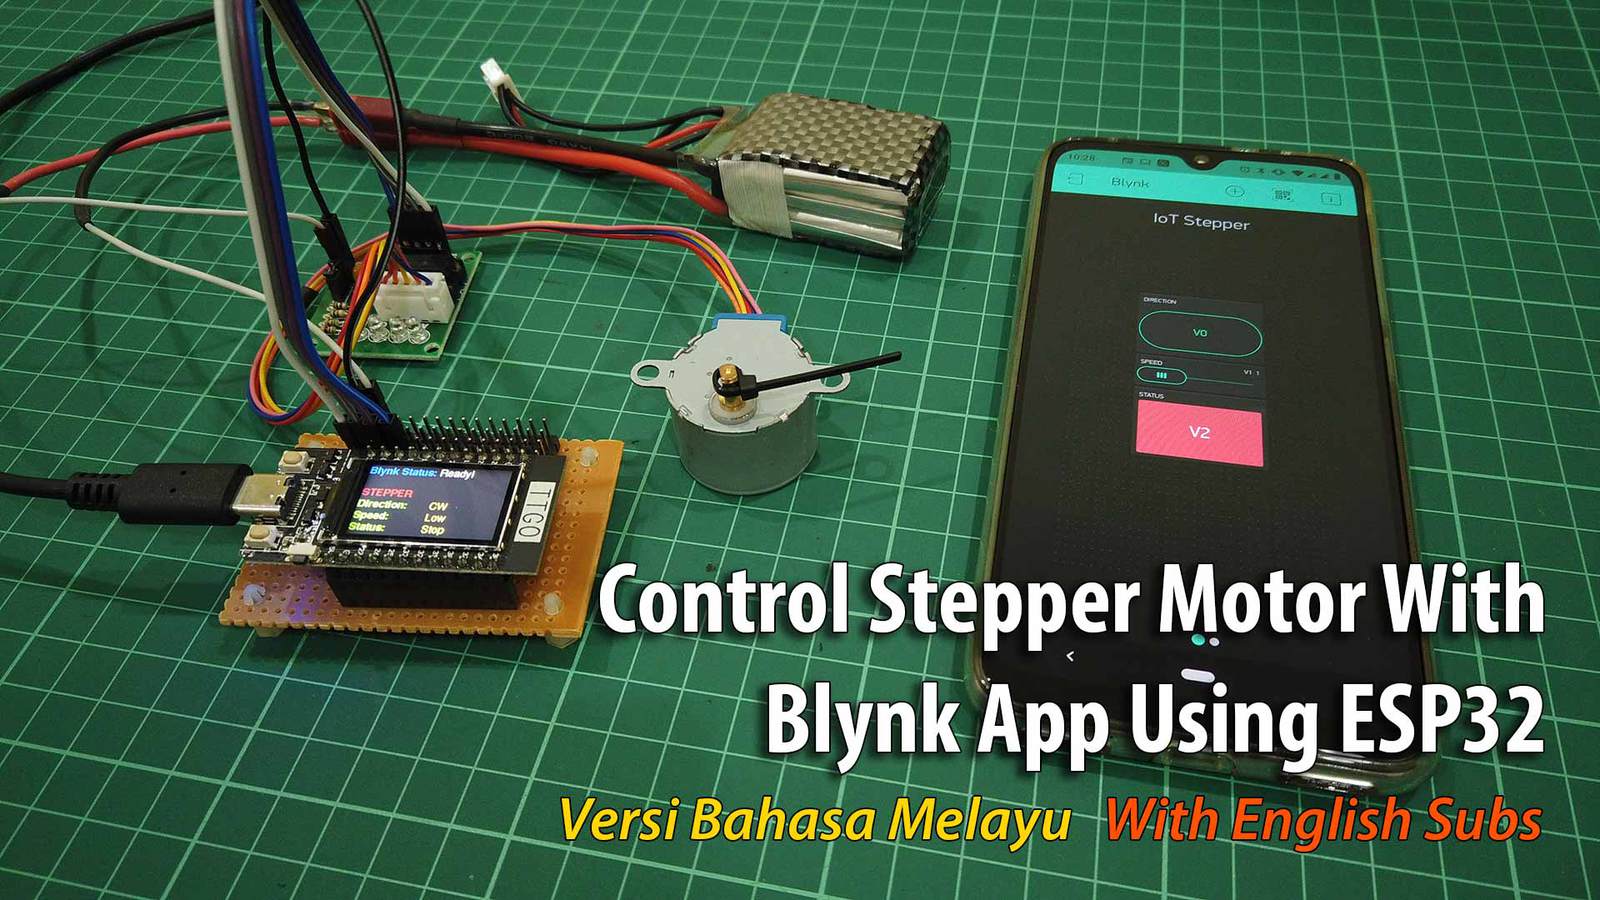 Control Stepper Motor With Blynk App Using ESP32